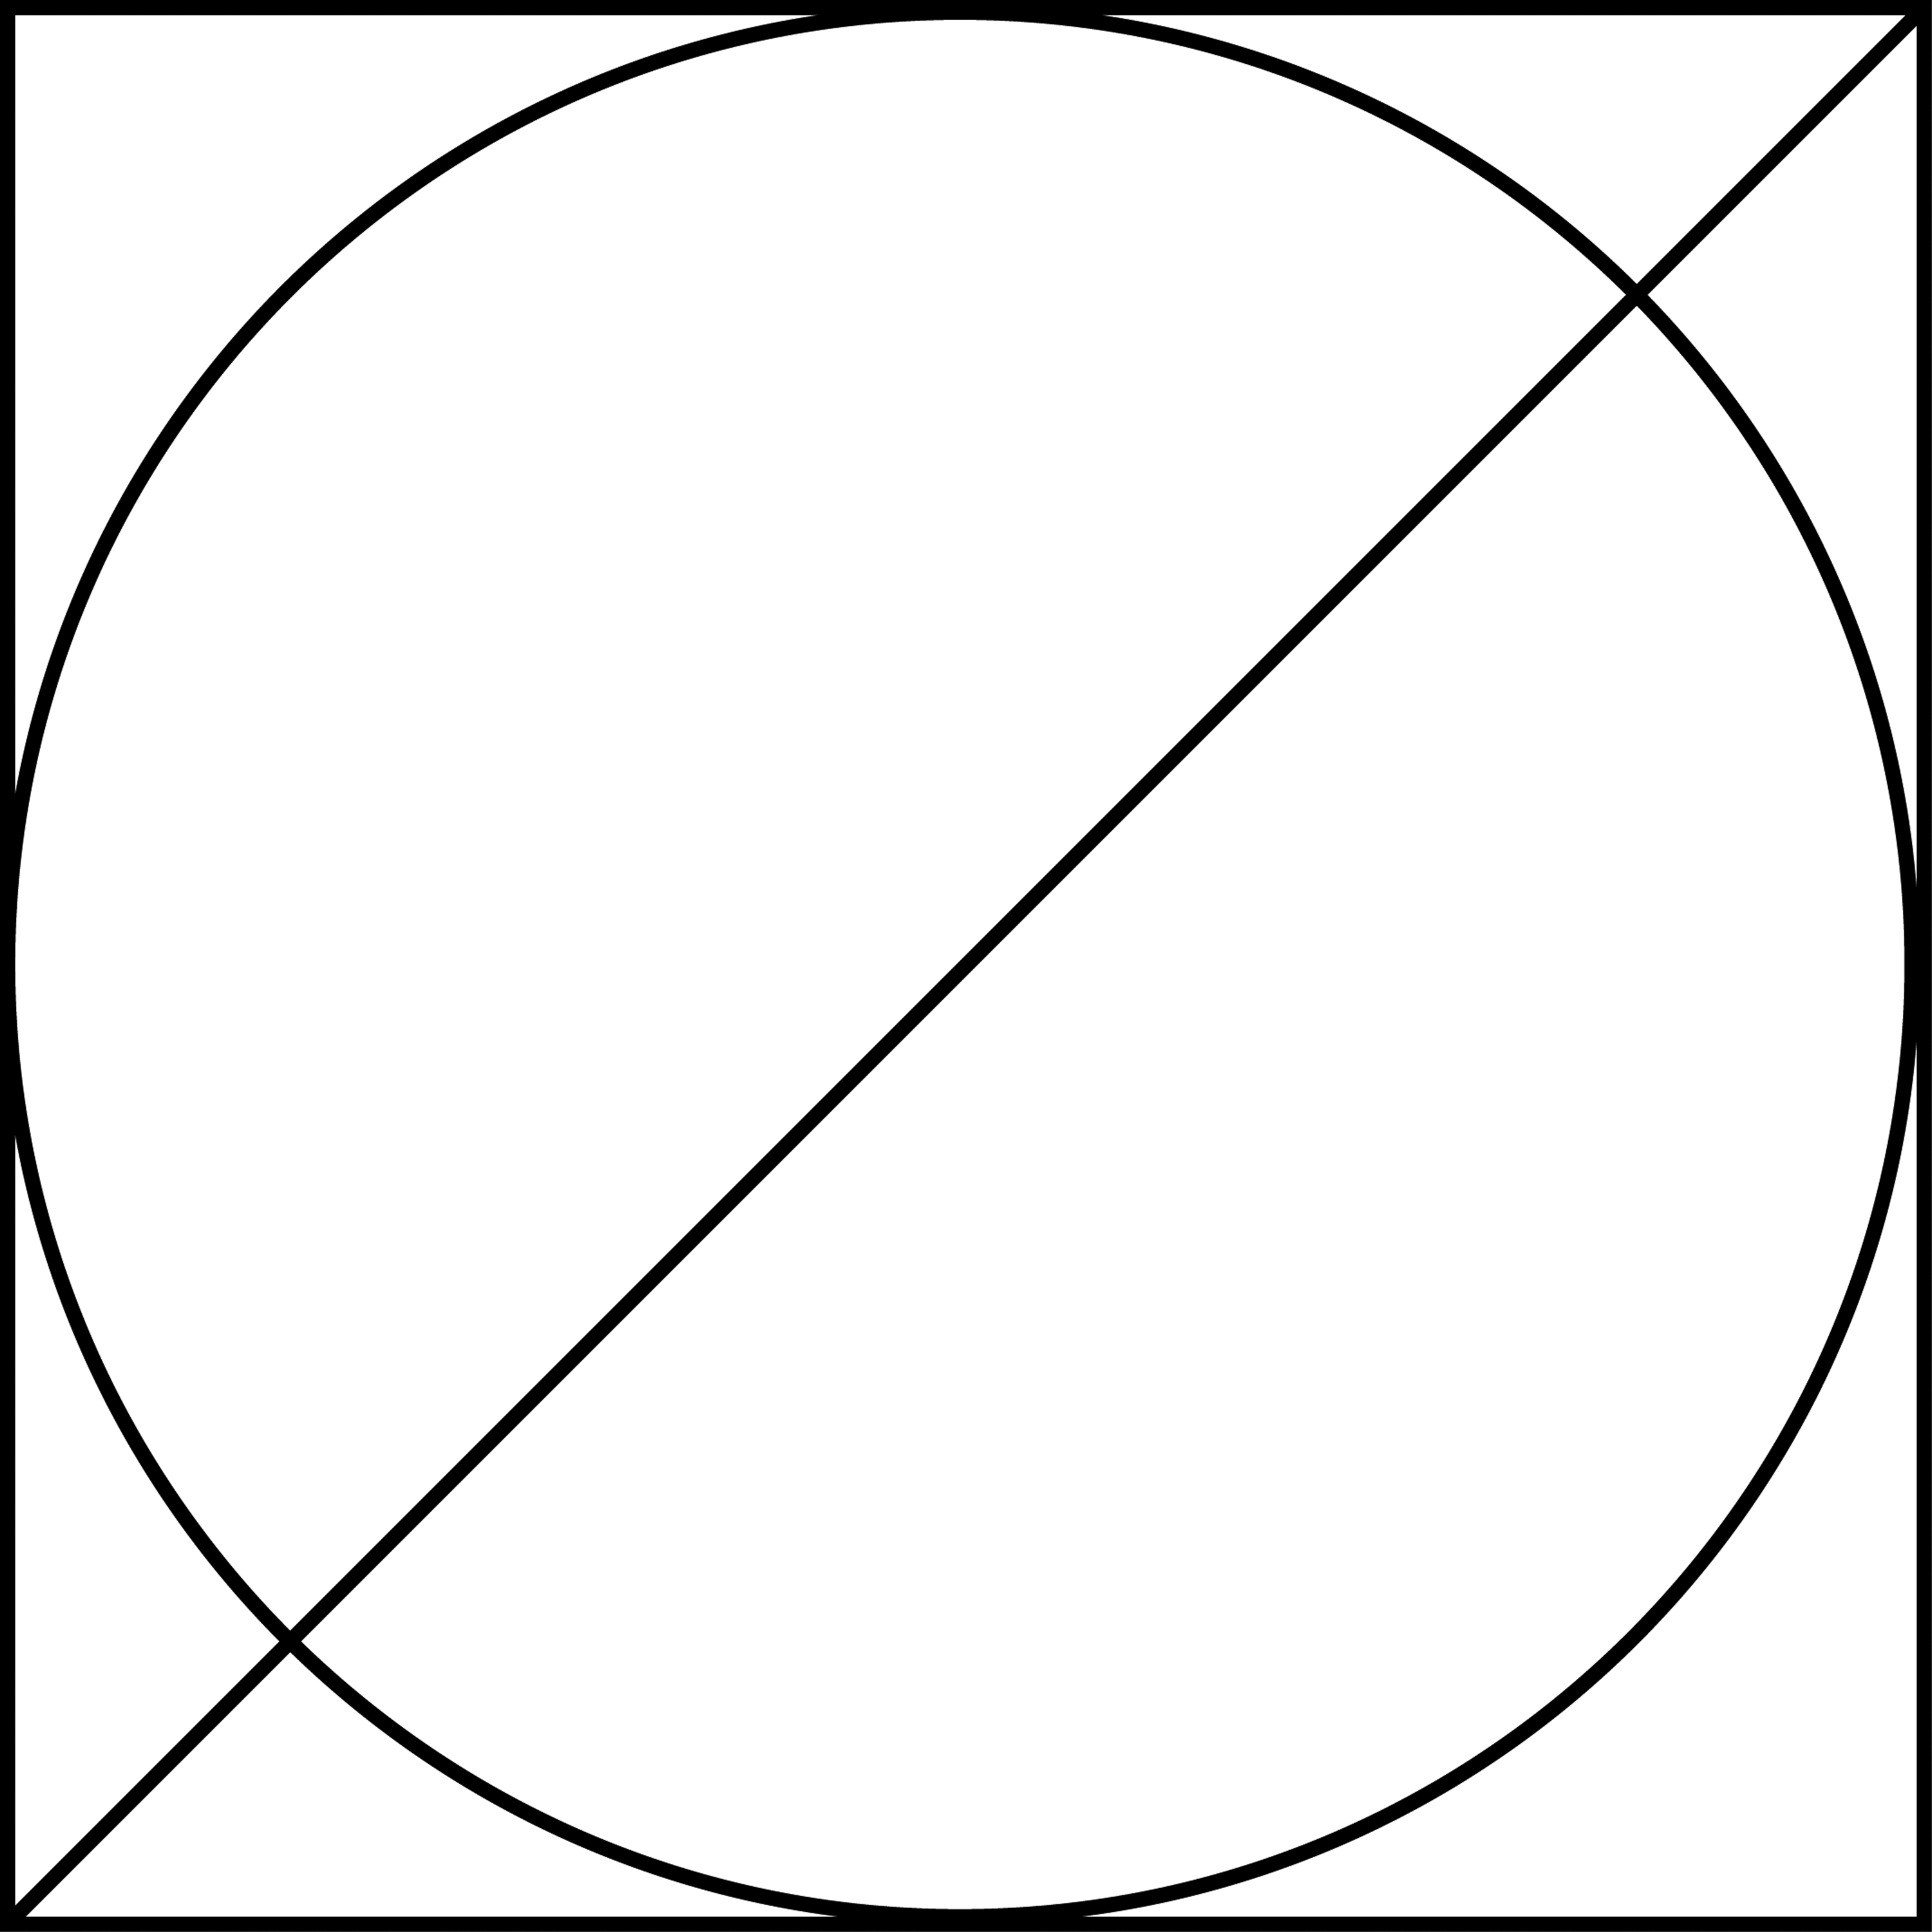 Центр круга в квадрате. Круг в квадрате. Контурное изображение круга. Круг вписанный в квадрат. Квадрат в окружности.